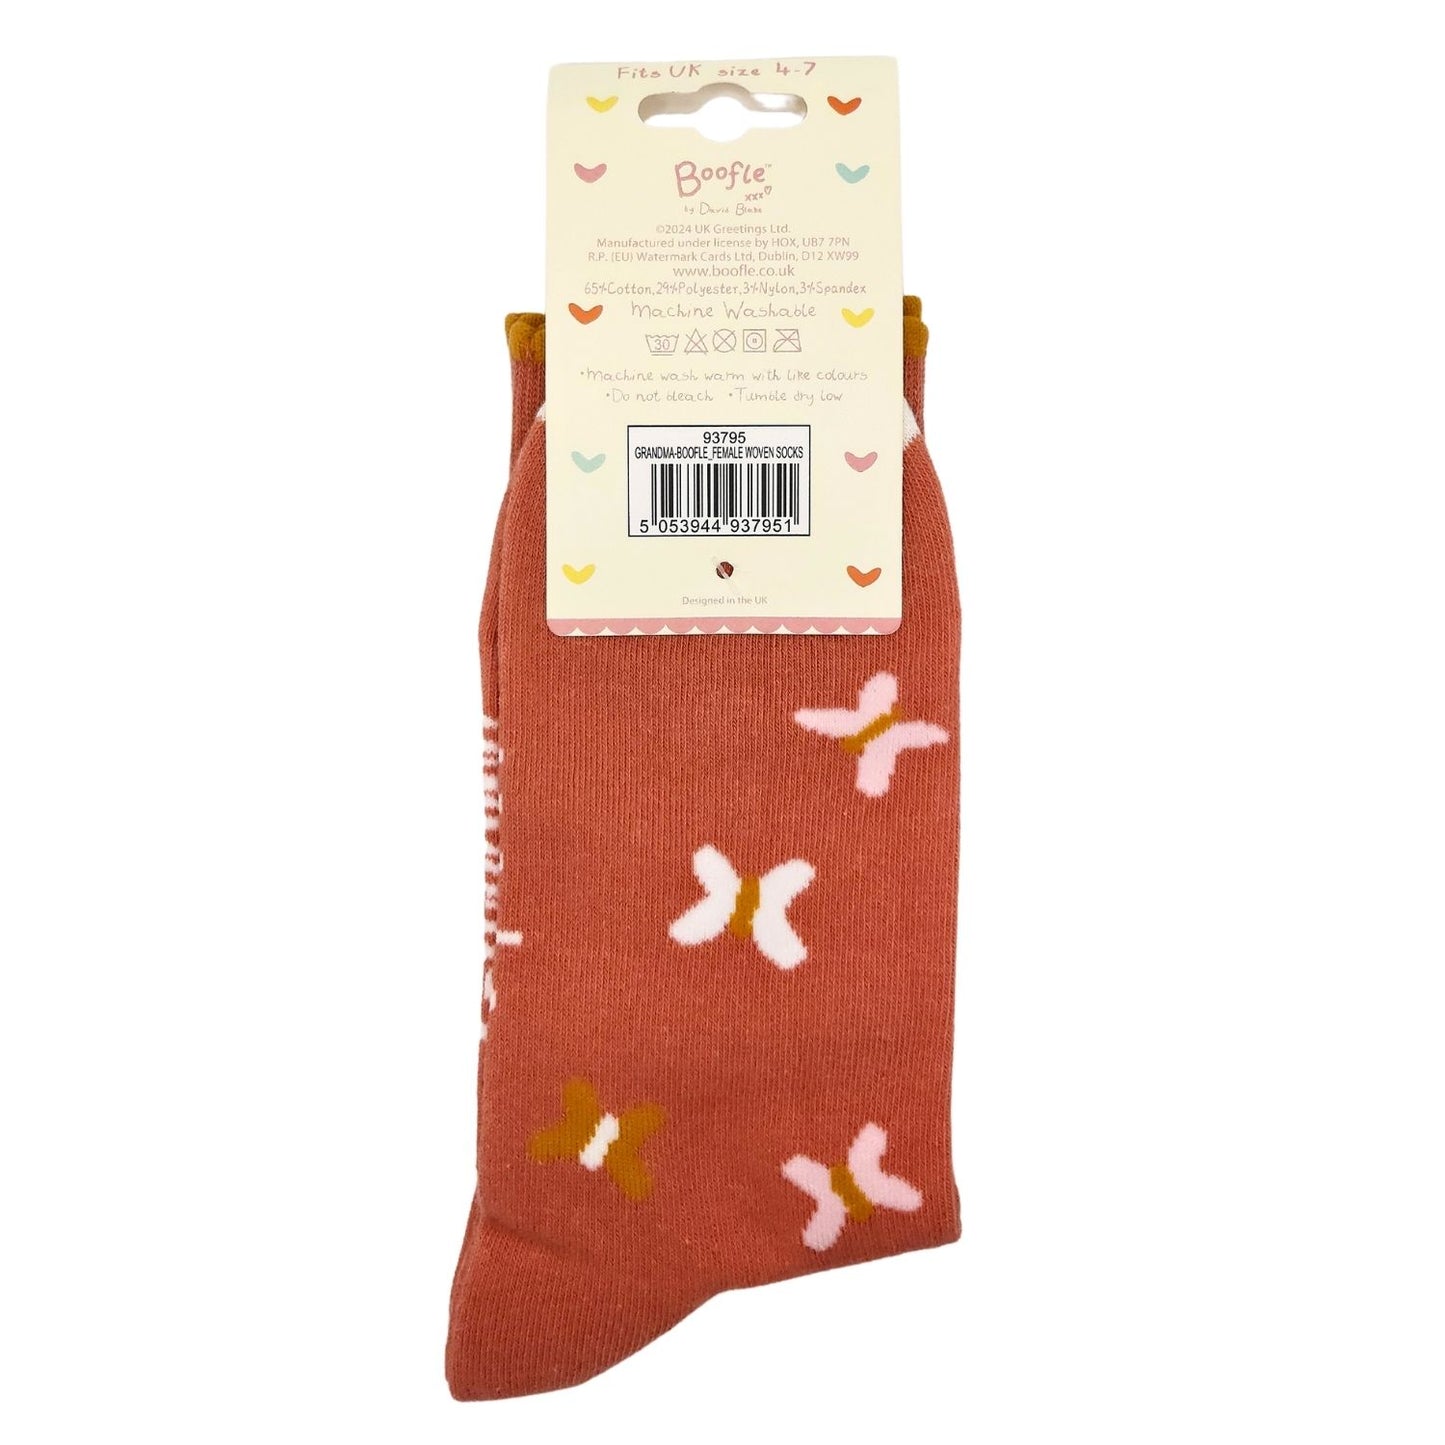 Boofle Special Grandma Peachy Fluttering Beauties Socks Gift Idea